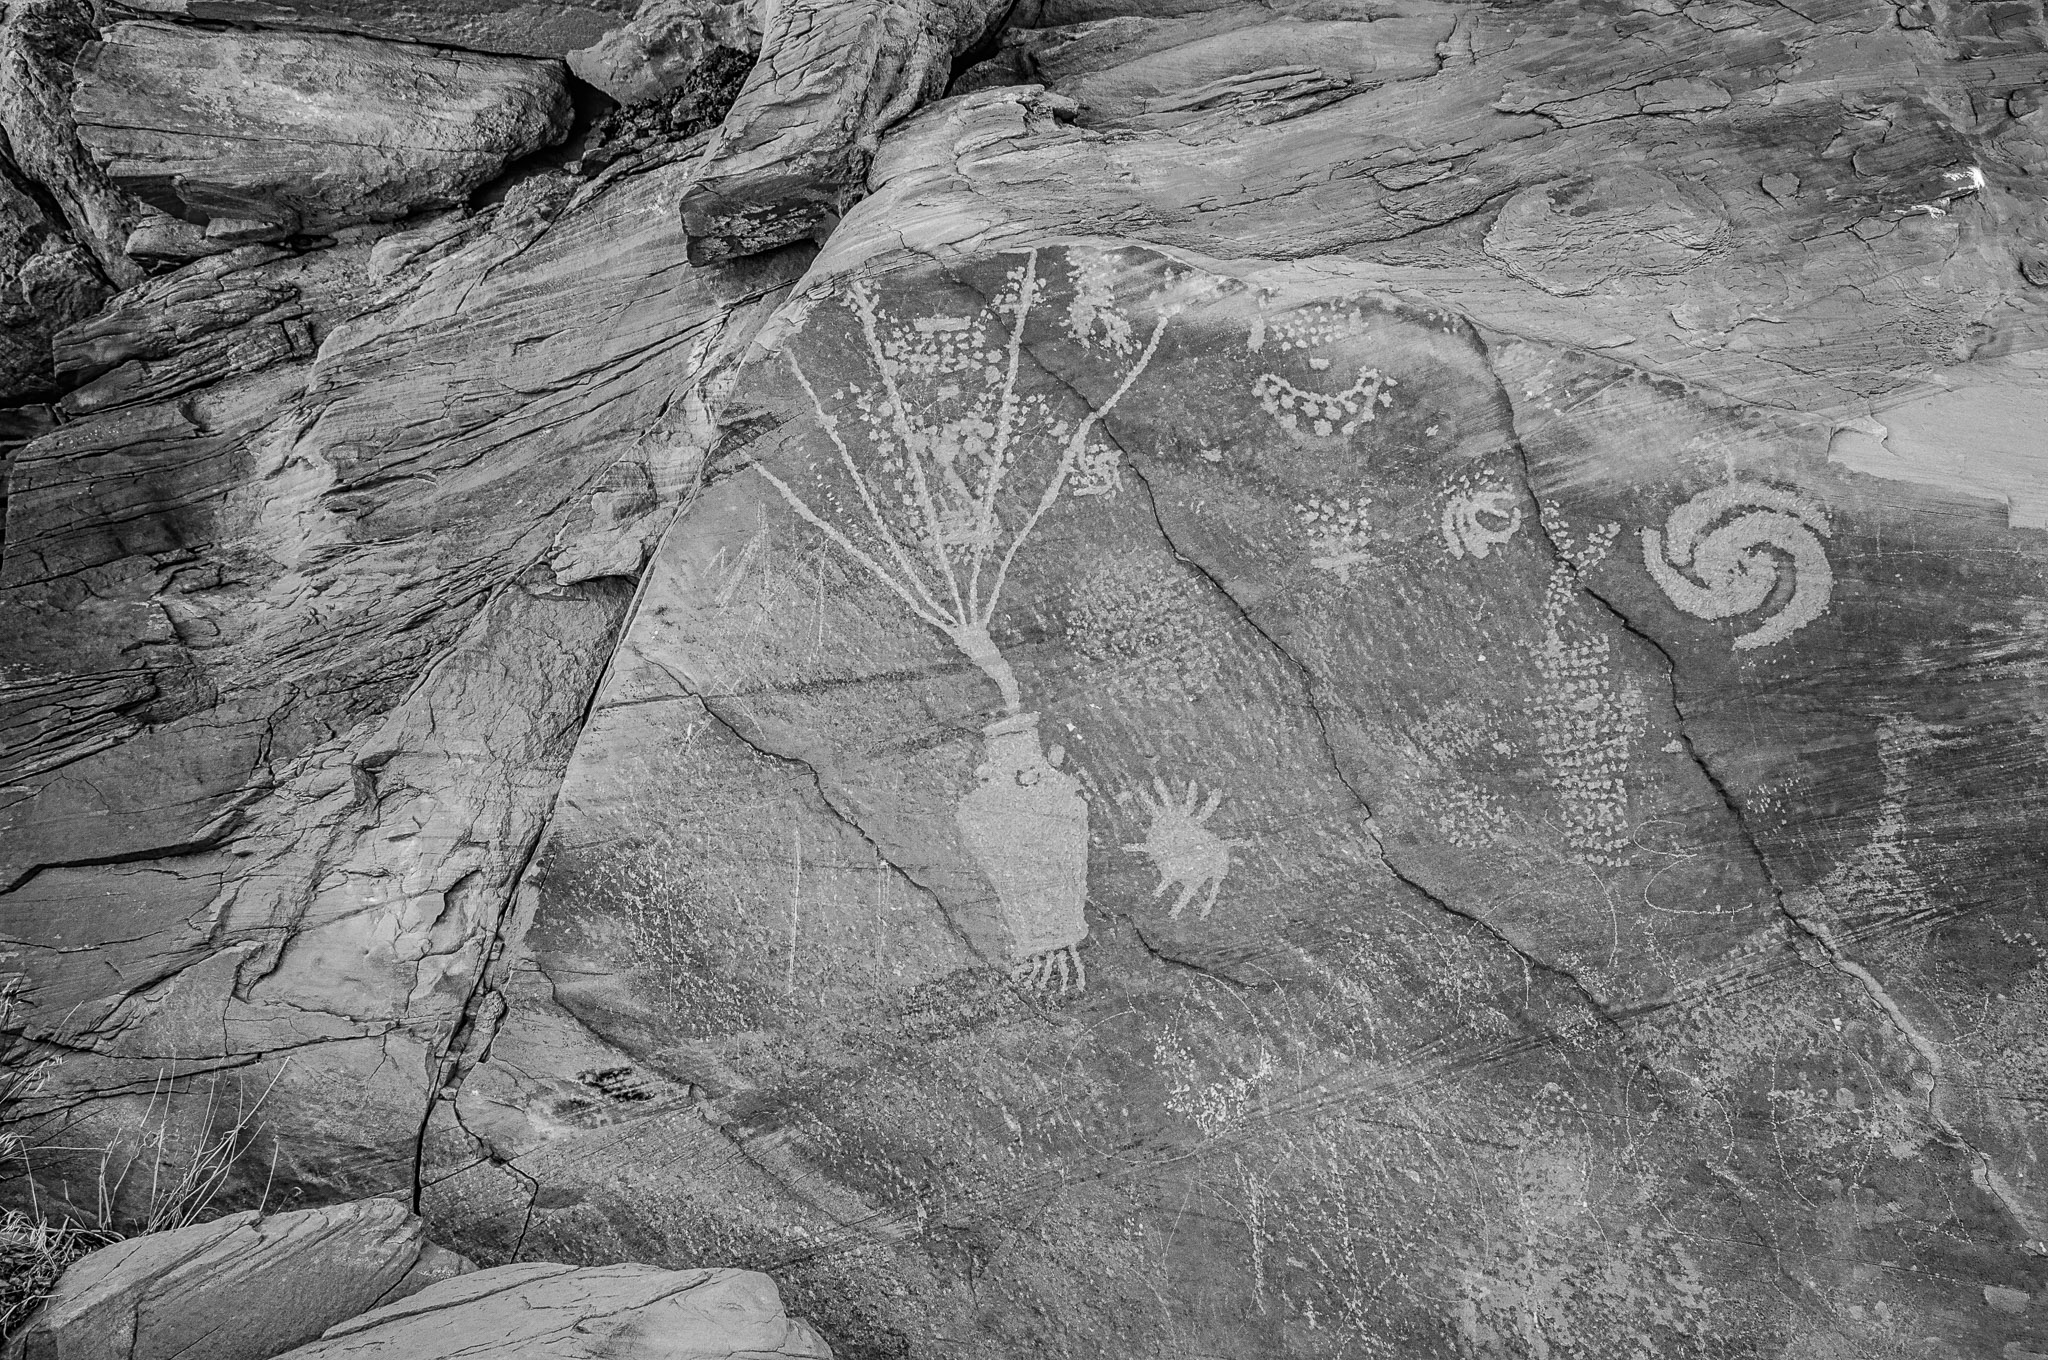 Closeup of petroglyphs on rock overlooking Cub Creek In Dinosaur National Monument.